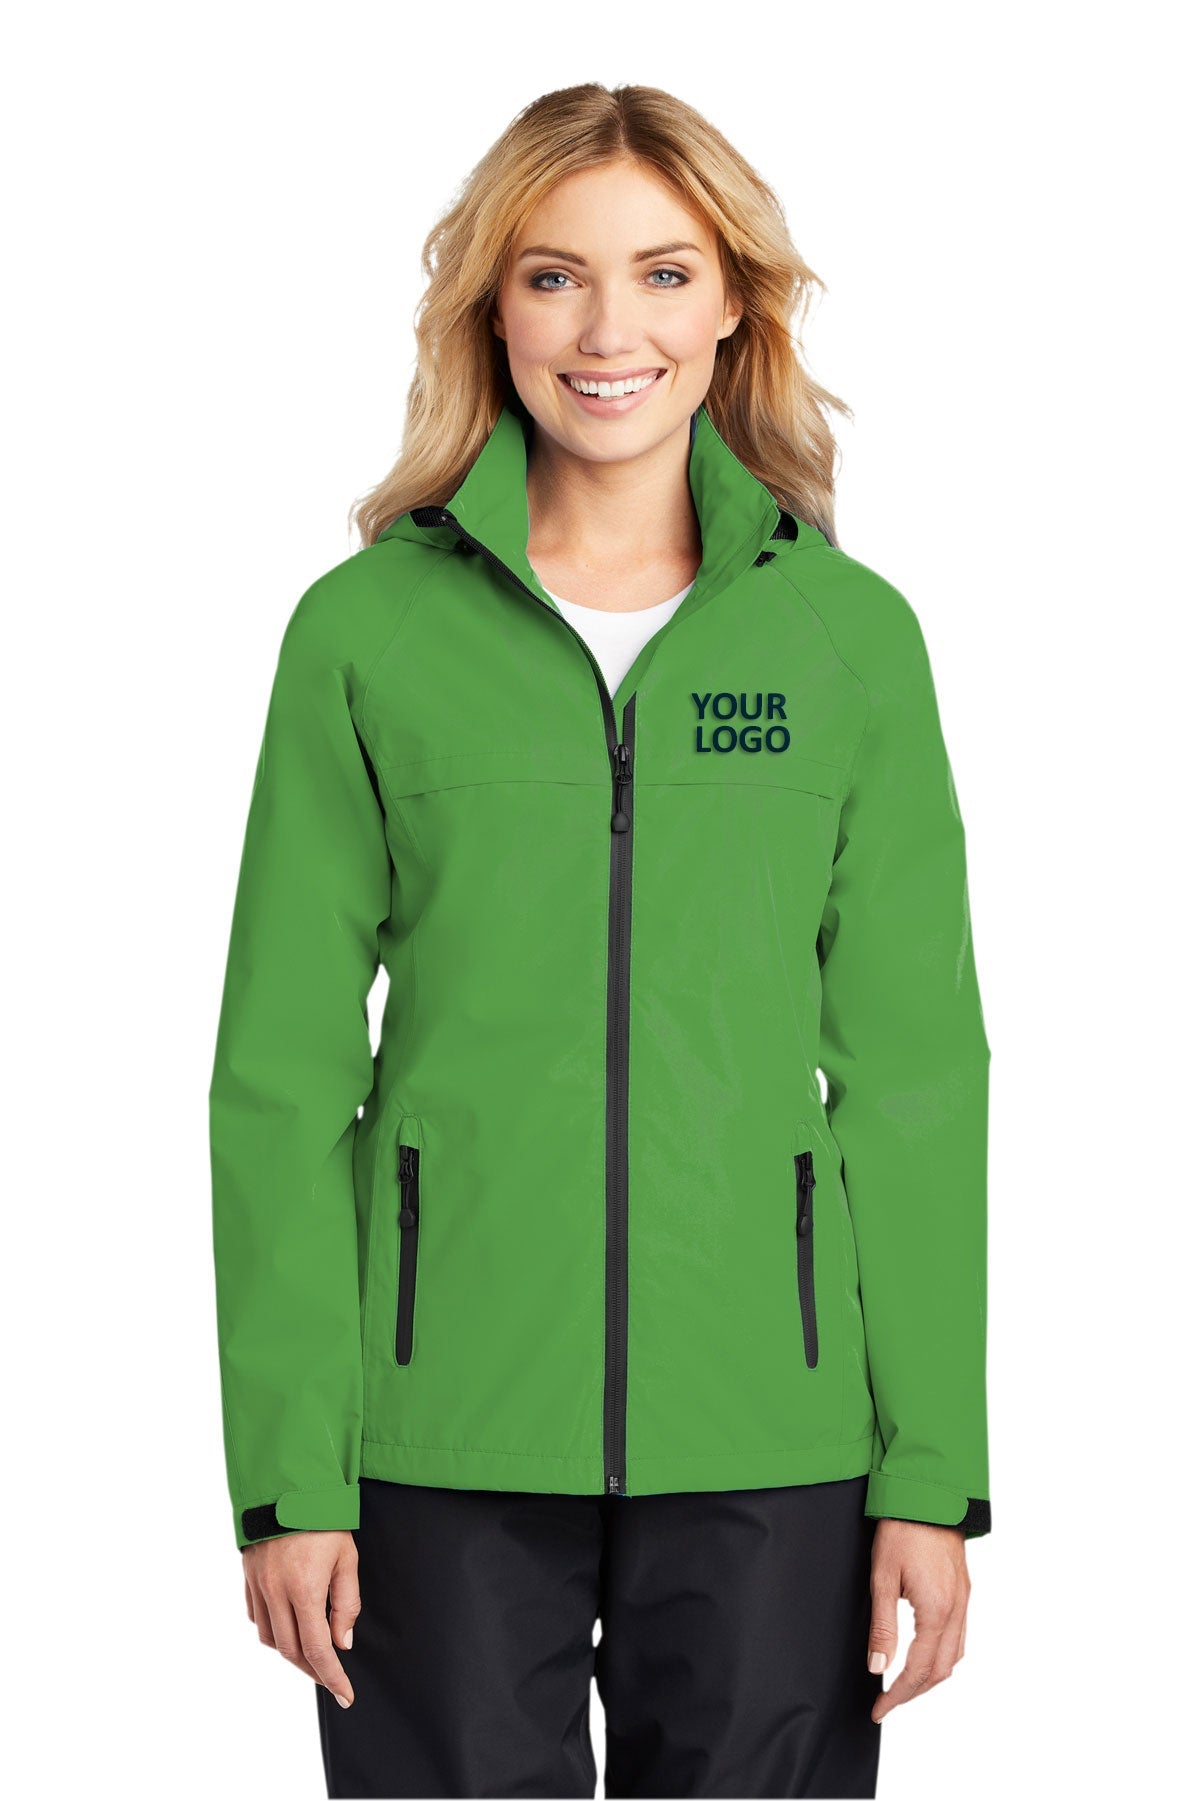 Port Authority Vine Green L333 company jackets with logo